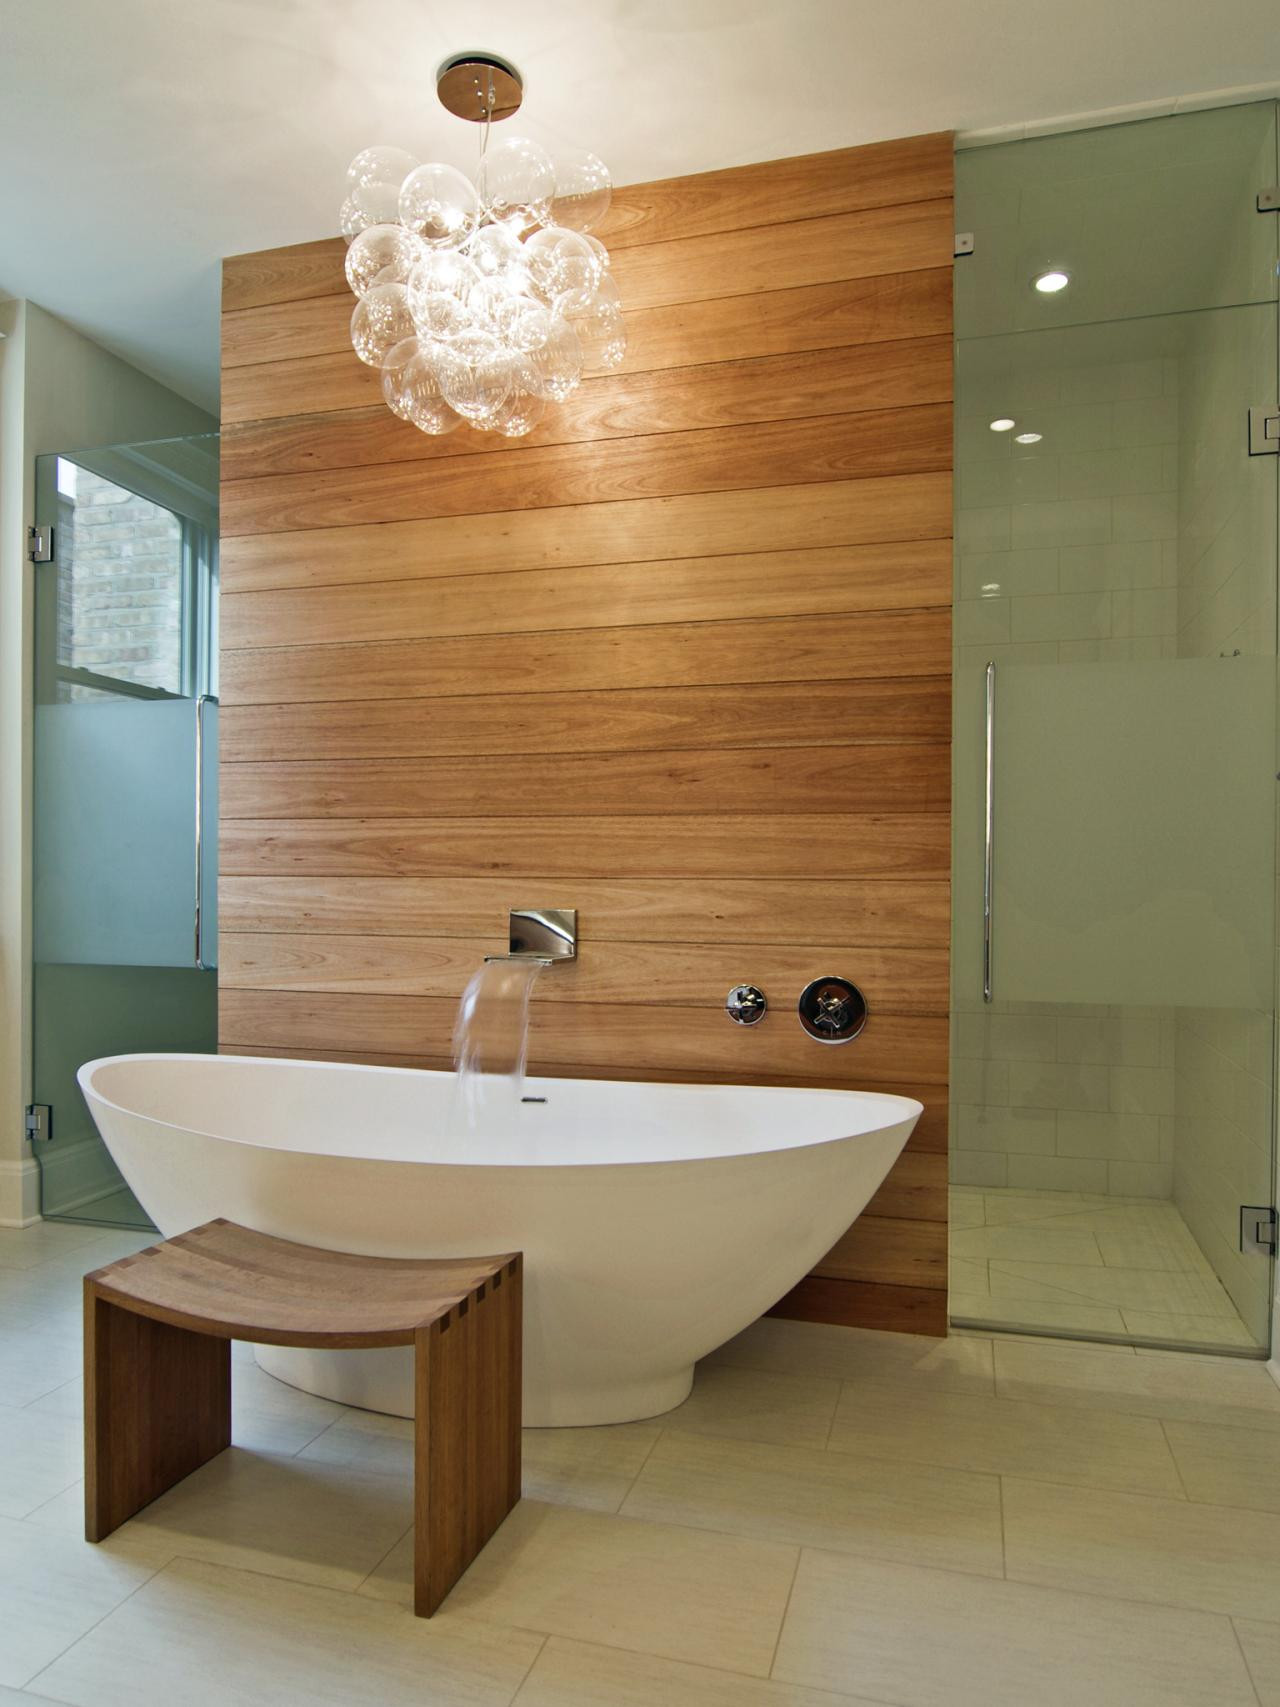 Spa Bathroom Decor
 26 Spa Inspired Bathroom Decorating Ideas